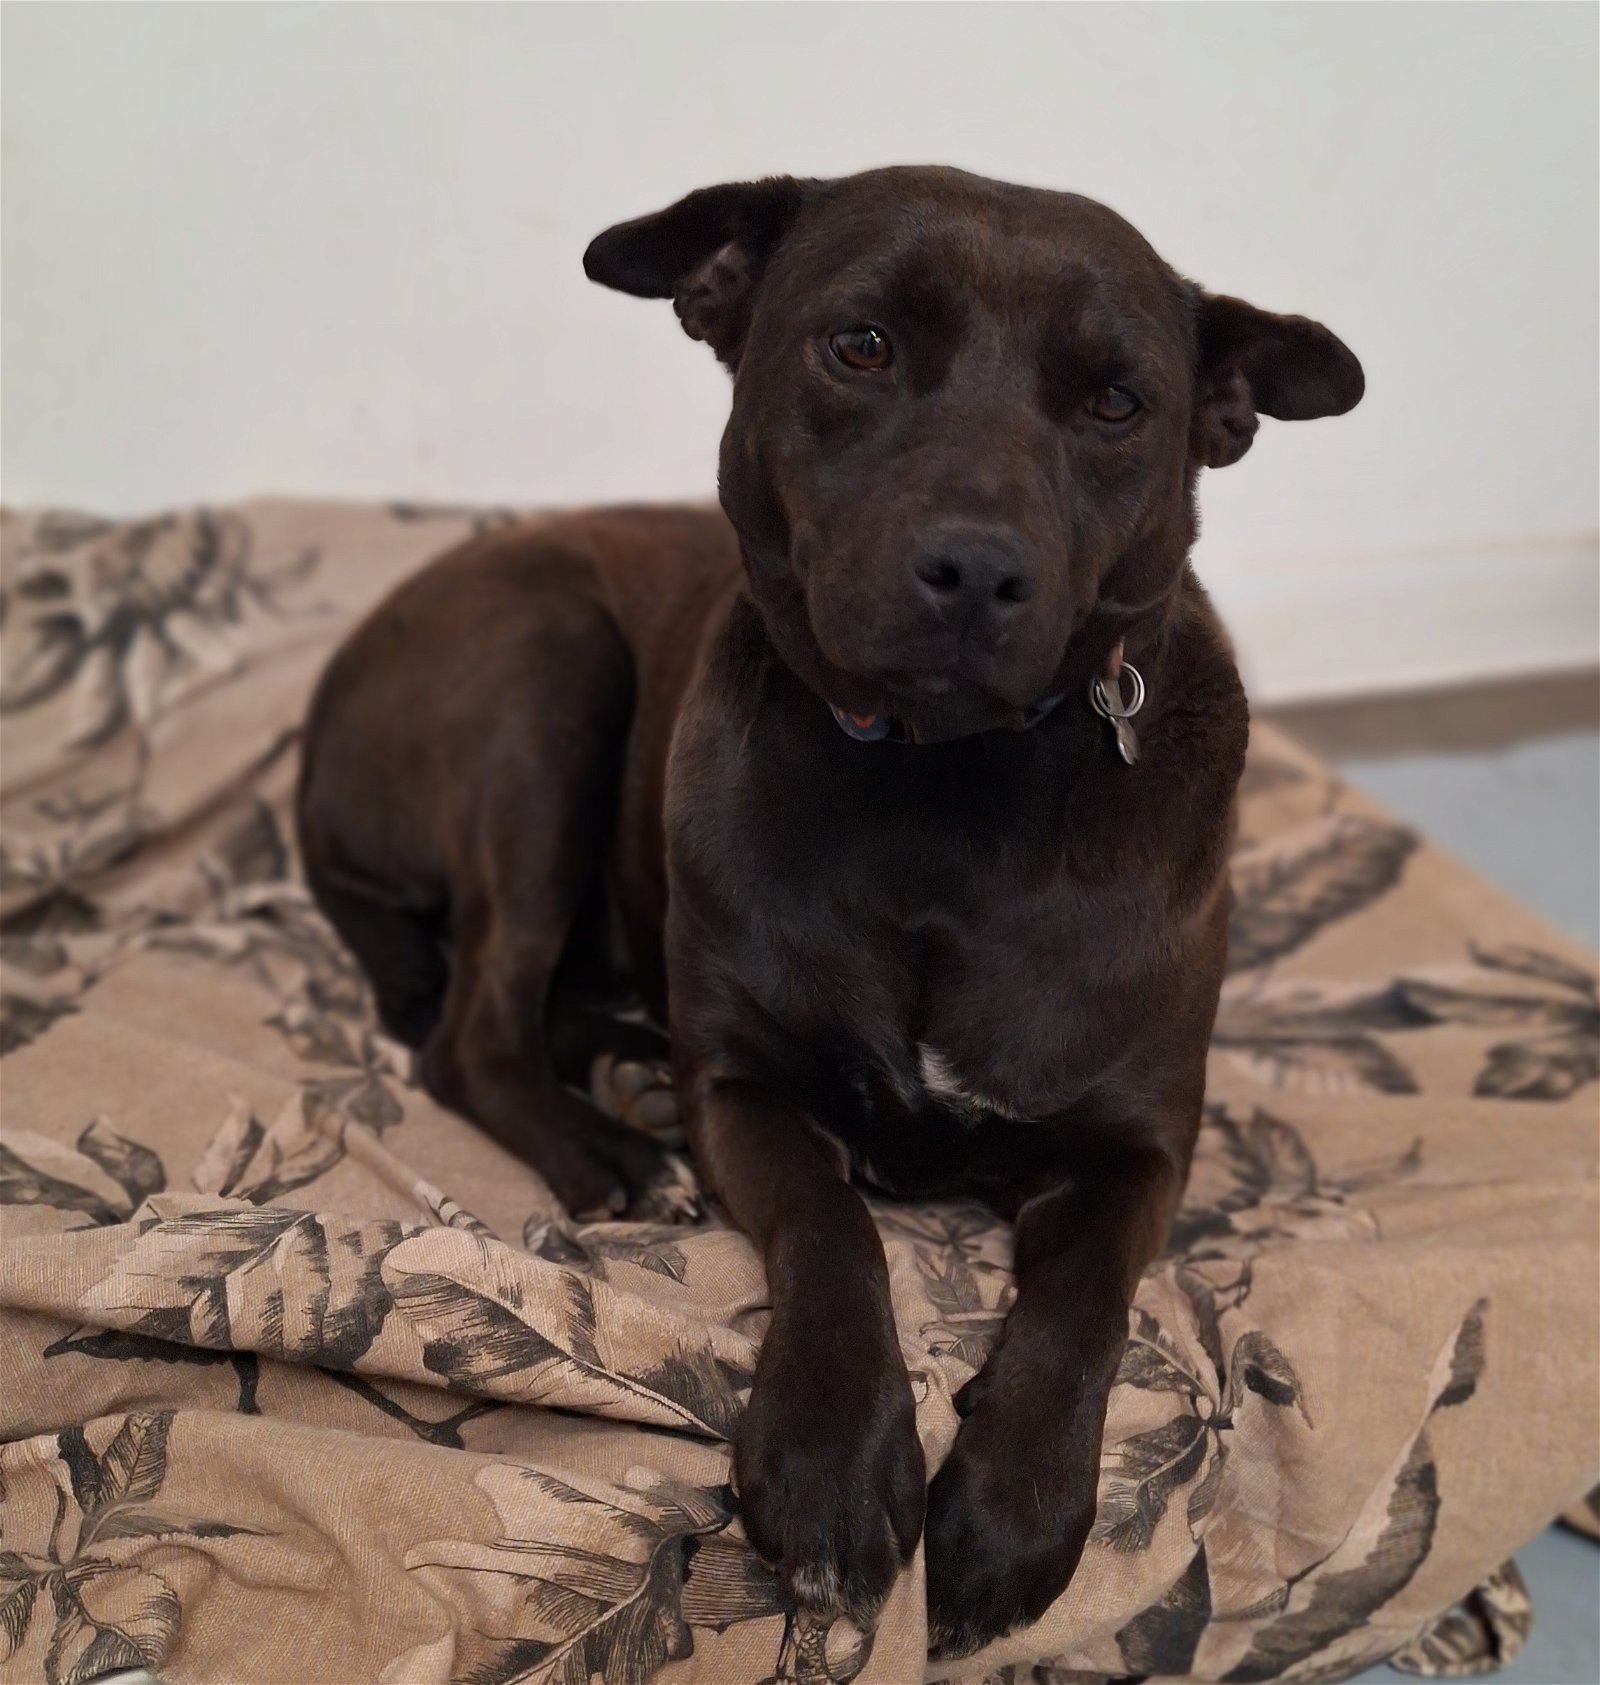 KAYLEE, an adoptable Labrador Retriever in Chico, CA, 95973 | Photo Image 1